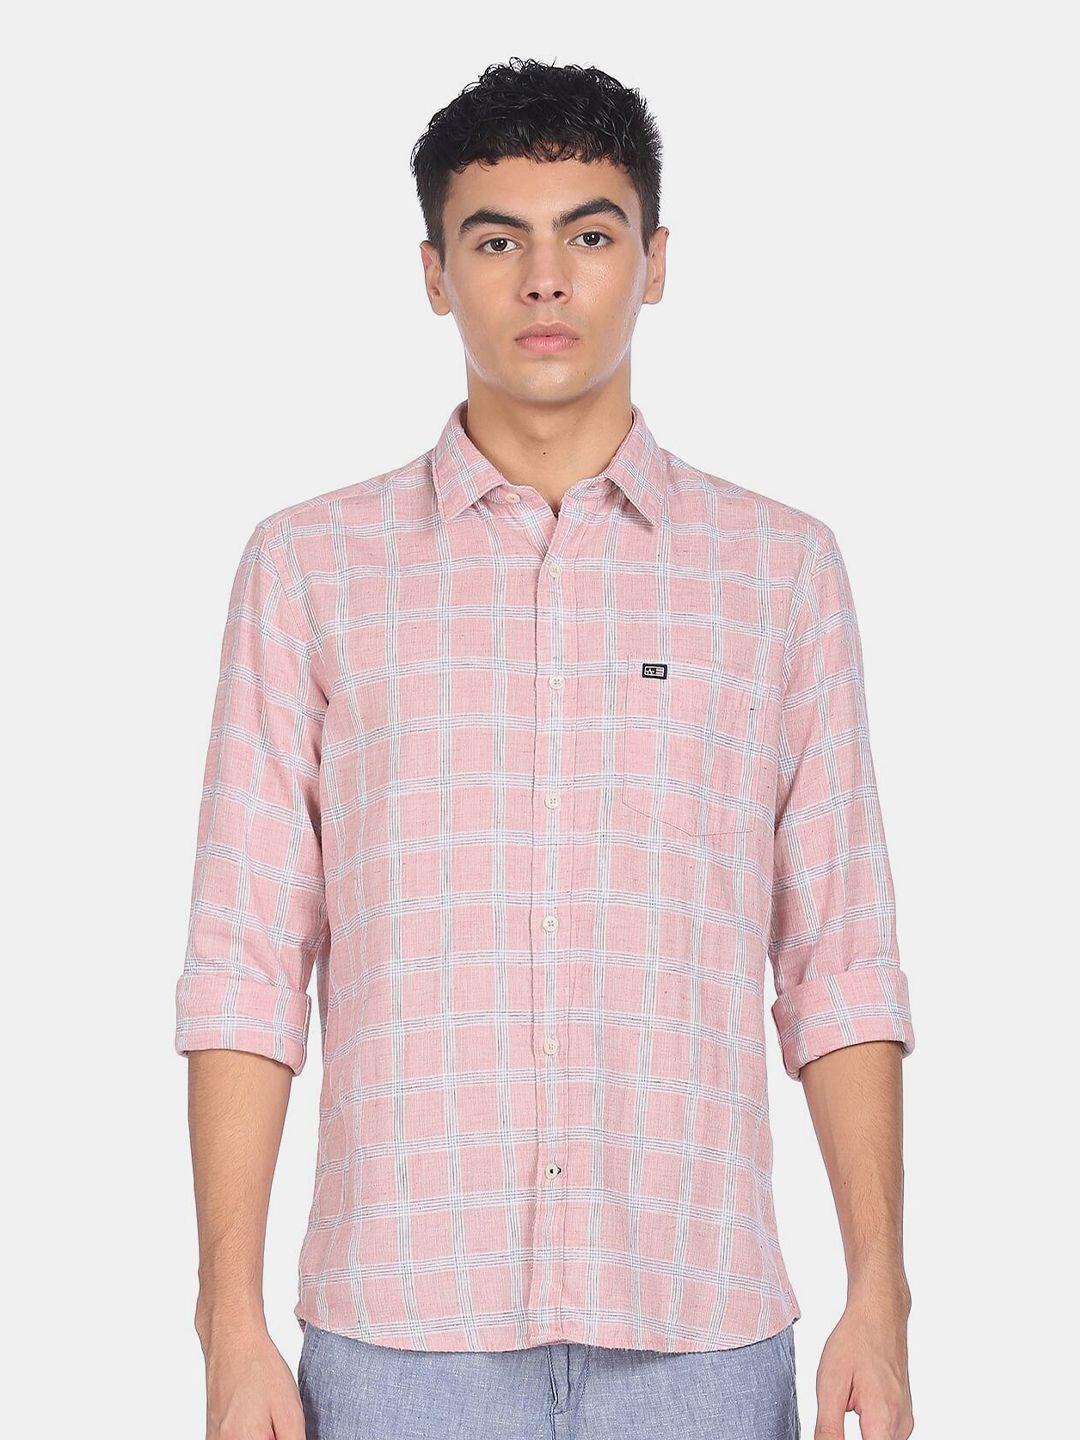 arrow-sport-men-pink-checked-casual-shirt